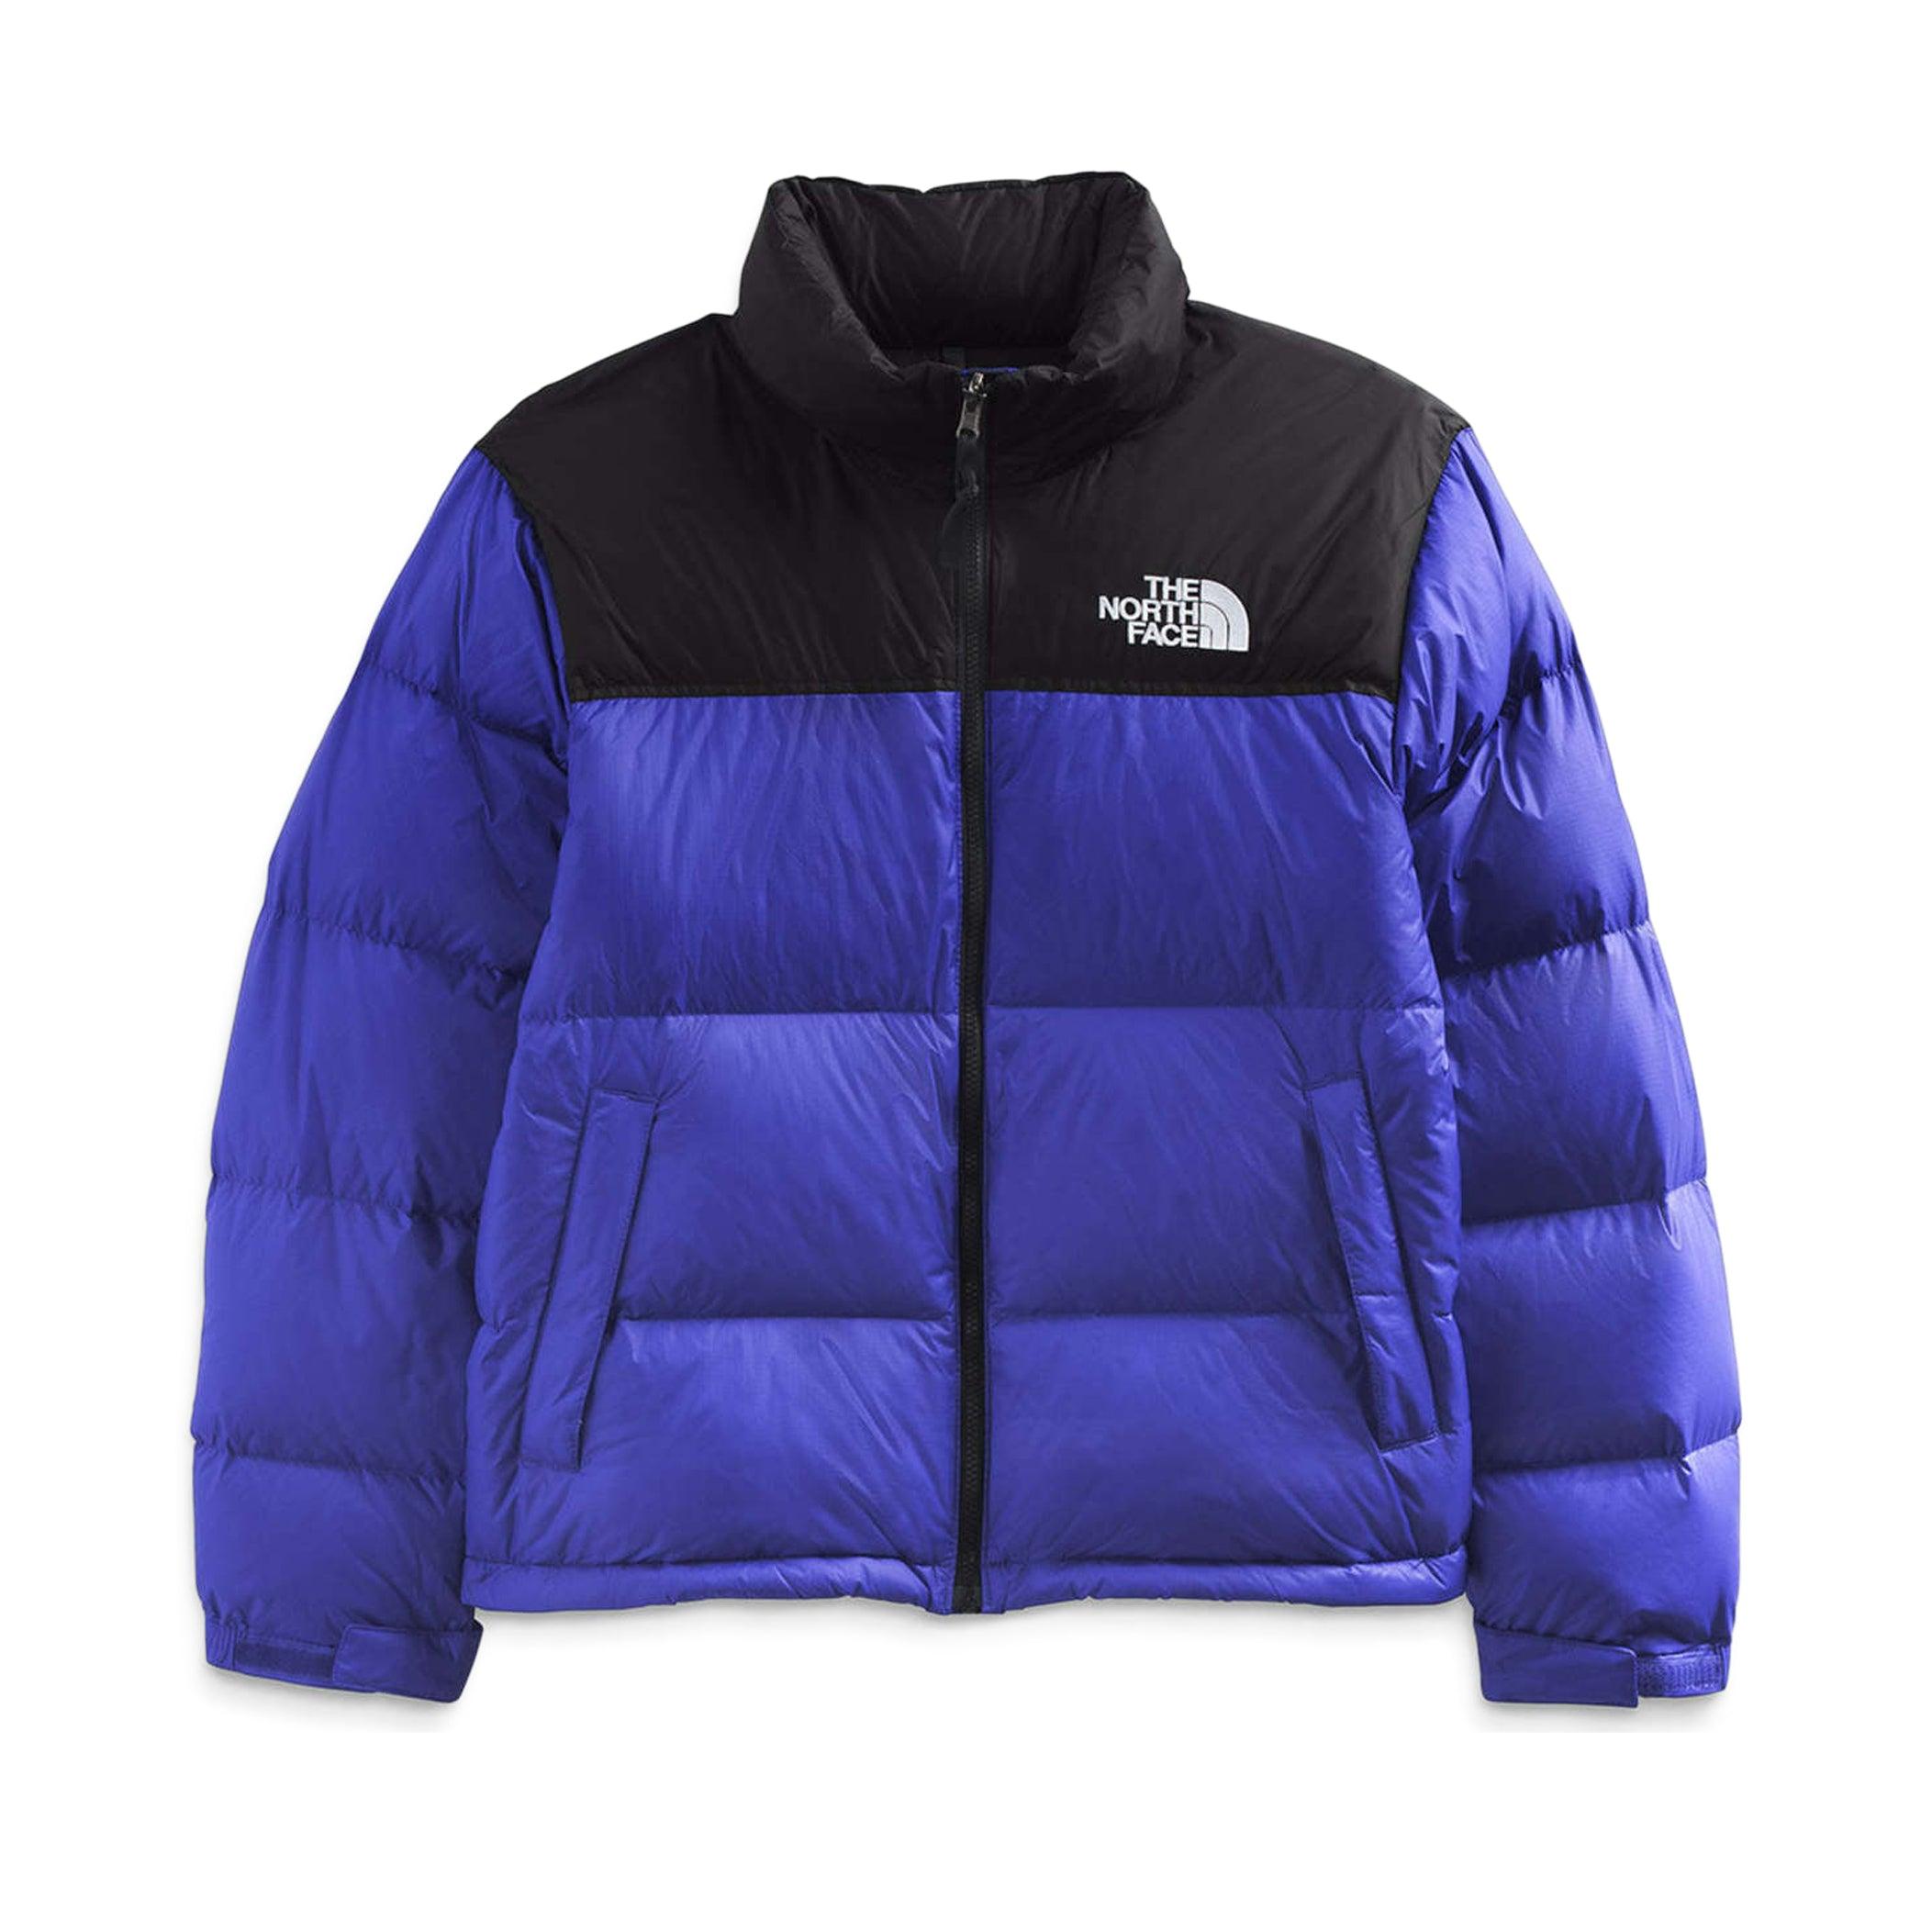 The North Face Jacket M 1996 Retro Nuptse Jkt Lapis Blu in Purple | Lyst